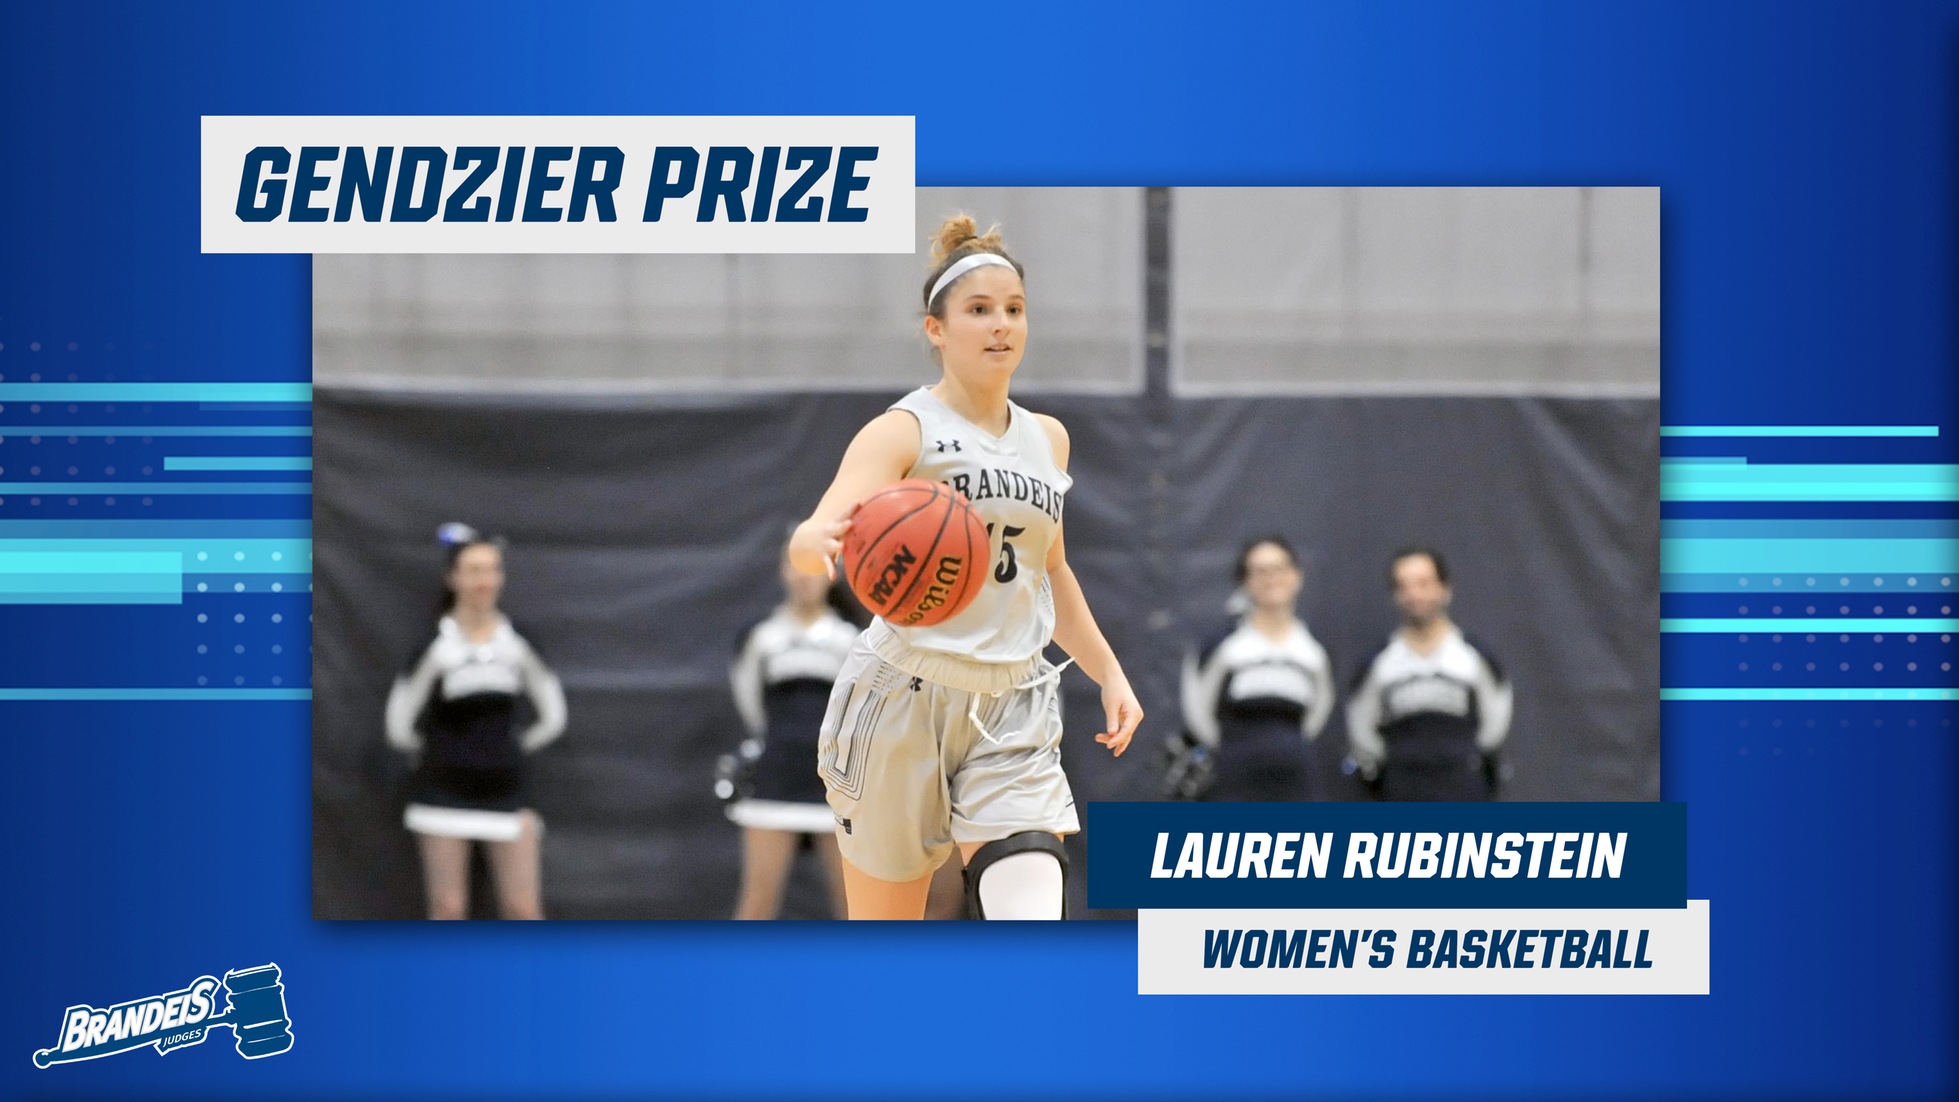 Gendzier Prize winner Lauren Rubinstein dribbling a basketball.